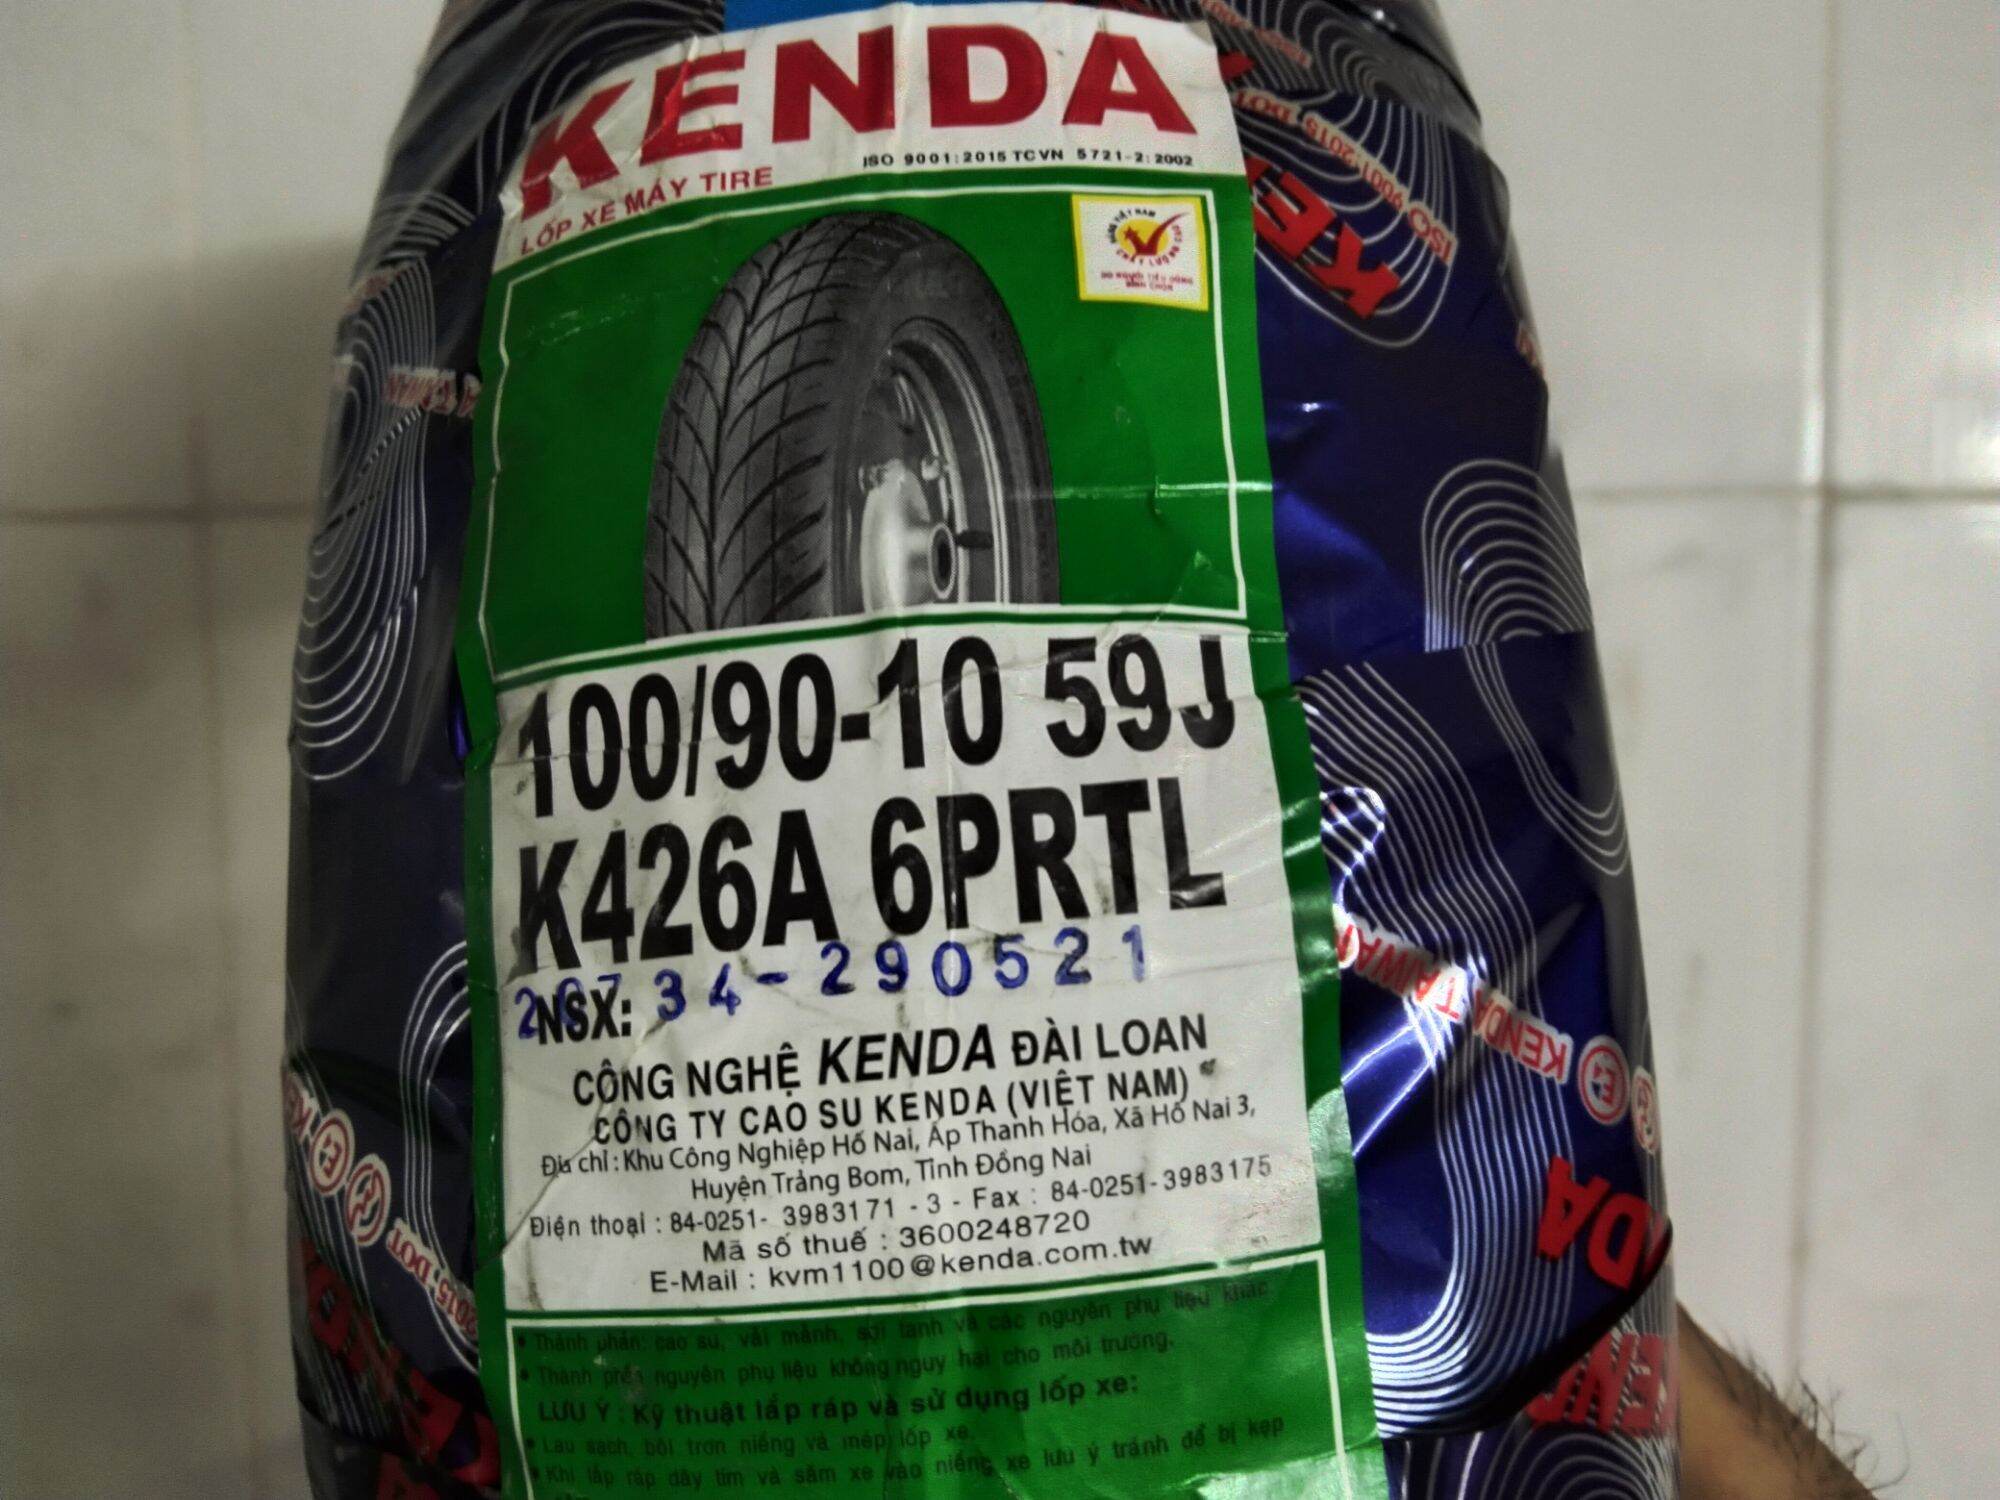 Lốp Kenda xe Atila 100-90/10 59J mã K426A ,loại dày 6 lớp bố.